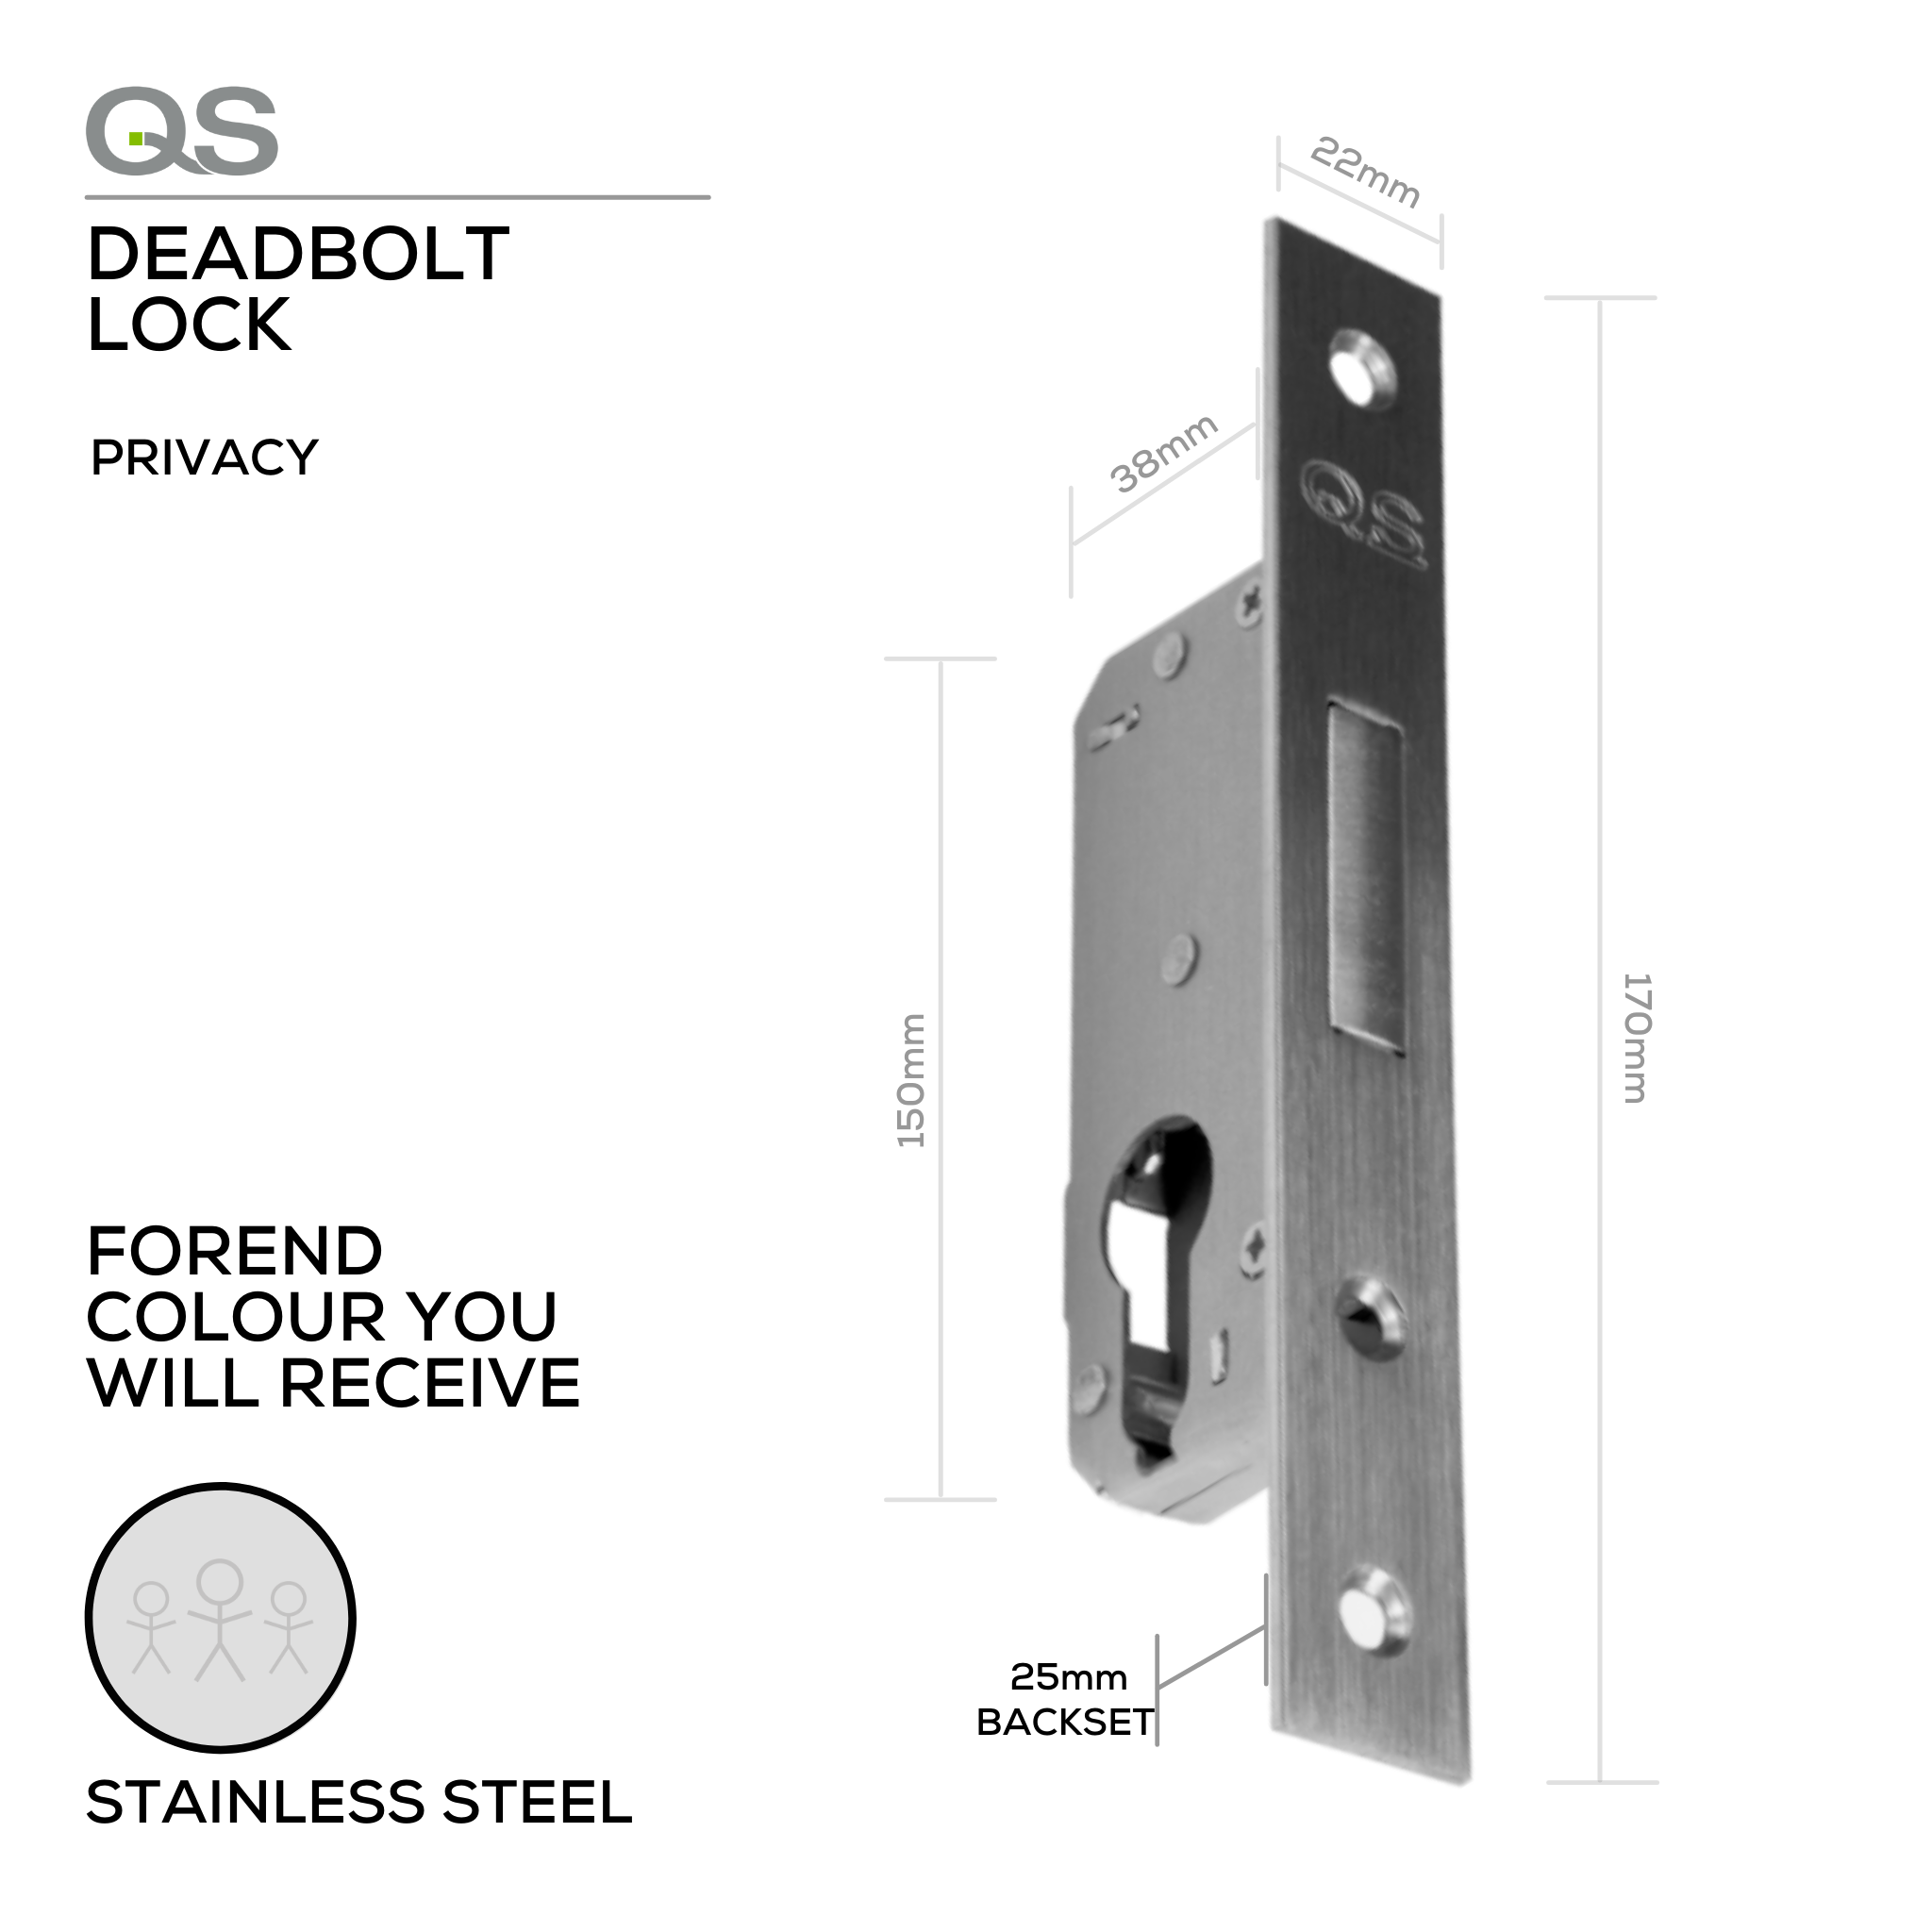 QS0025SS, Privacy, Deadbolt Lock, Euro Cylinder, Excluding Cylinder, 25mm (Backset), Stainless Steel, QS